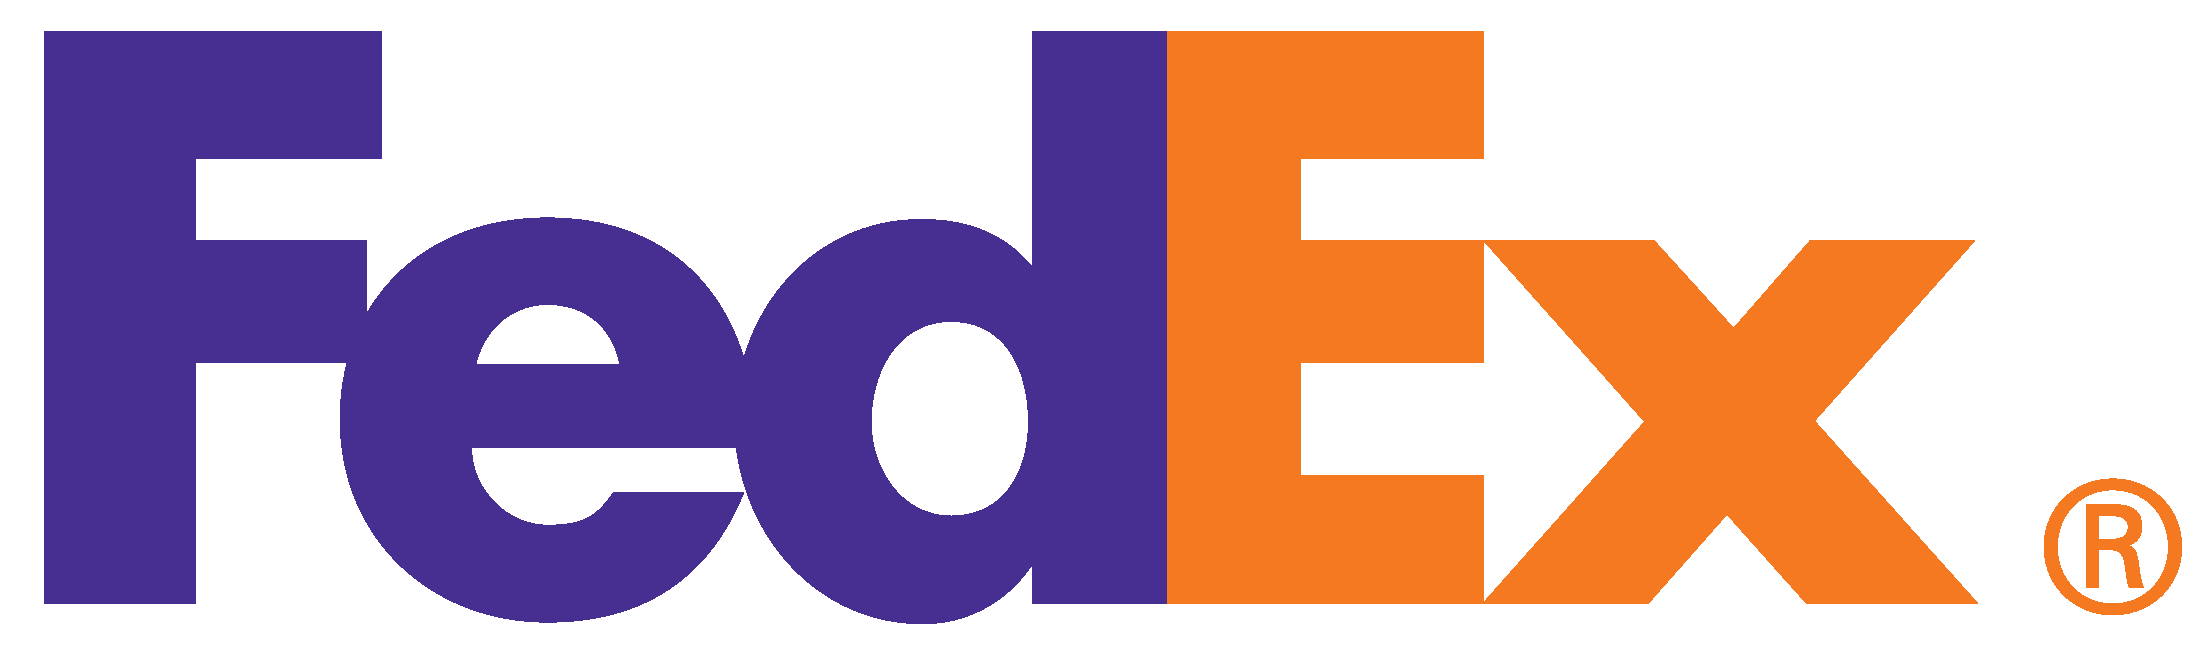 Fedex Office Logo PNG - 115935